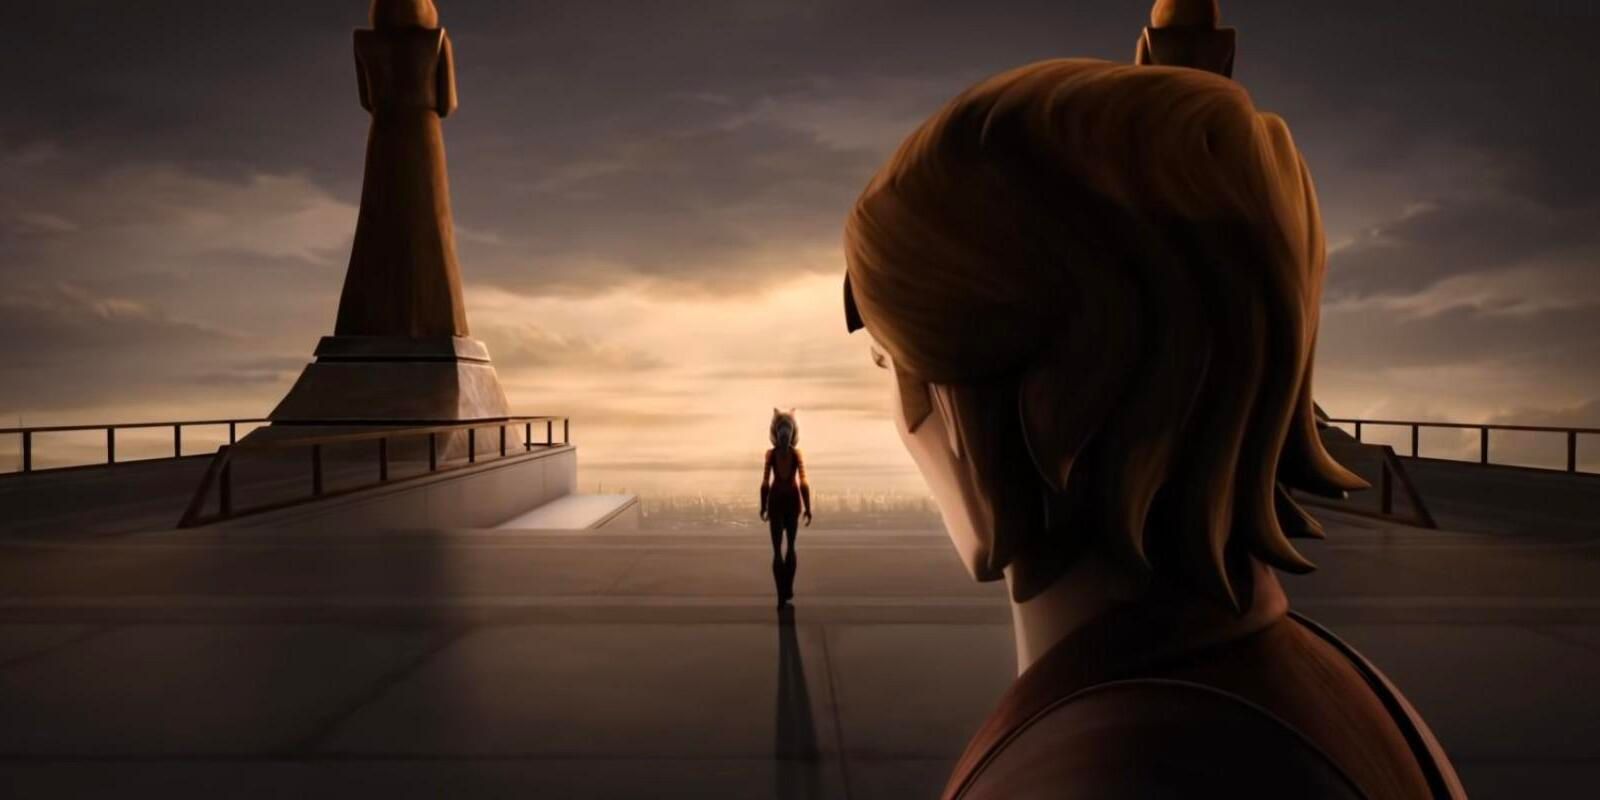 Anakin watches Ahsoka leave the Jedi Order